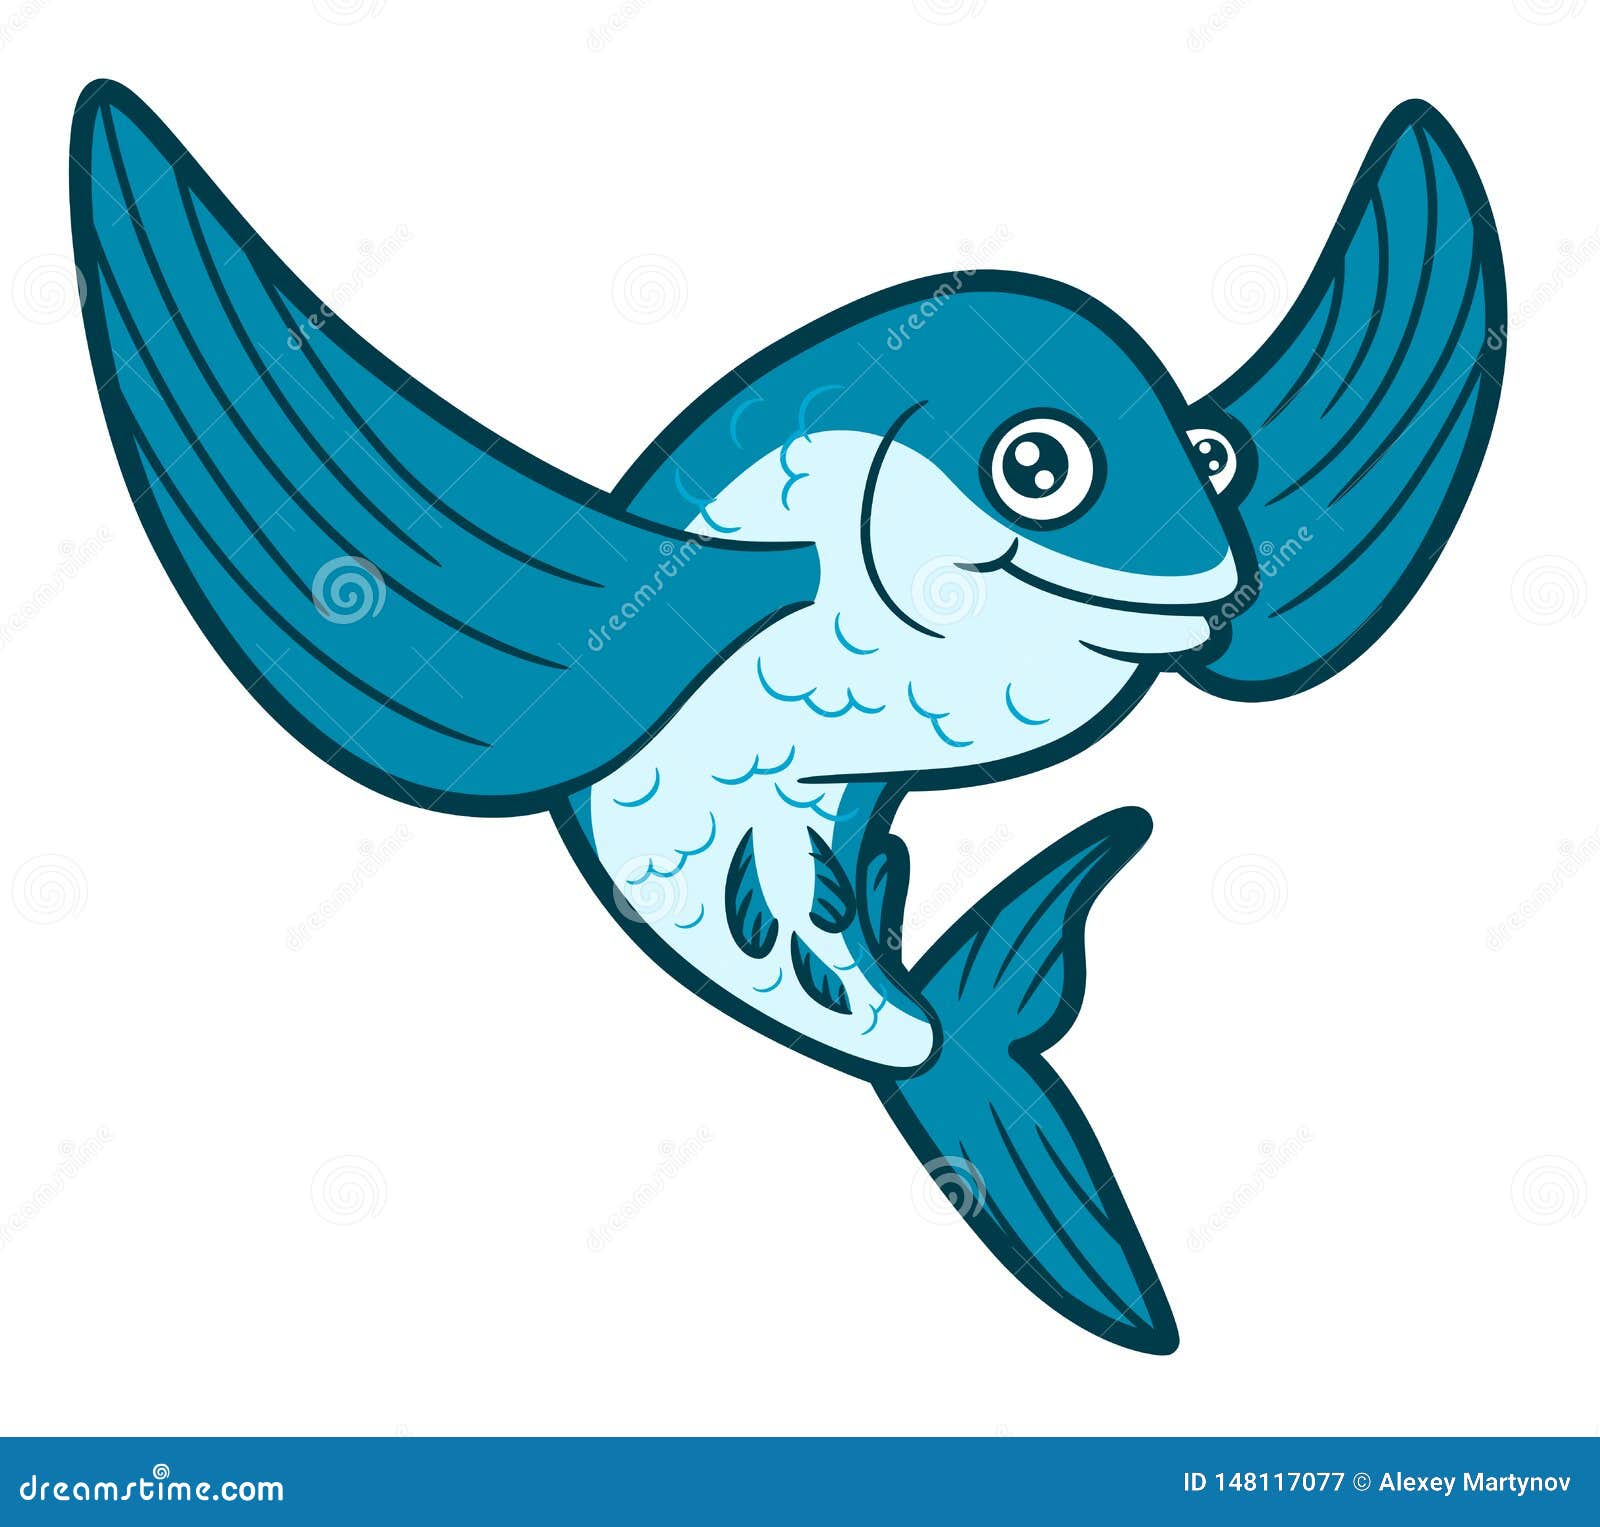 Funny cartoon flying fish stock vector. Illustration of humor - 148117077